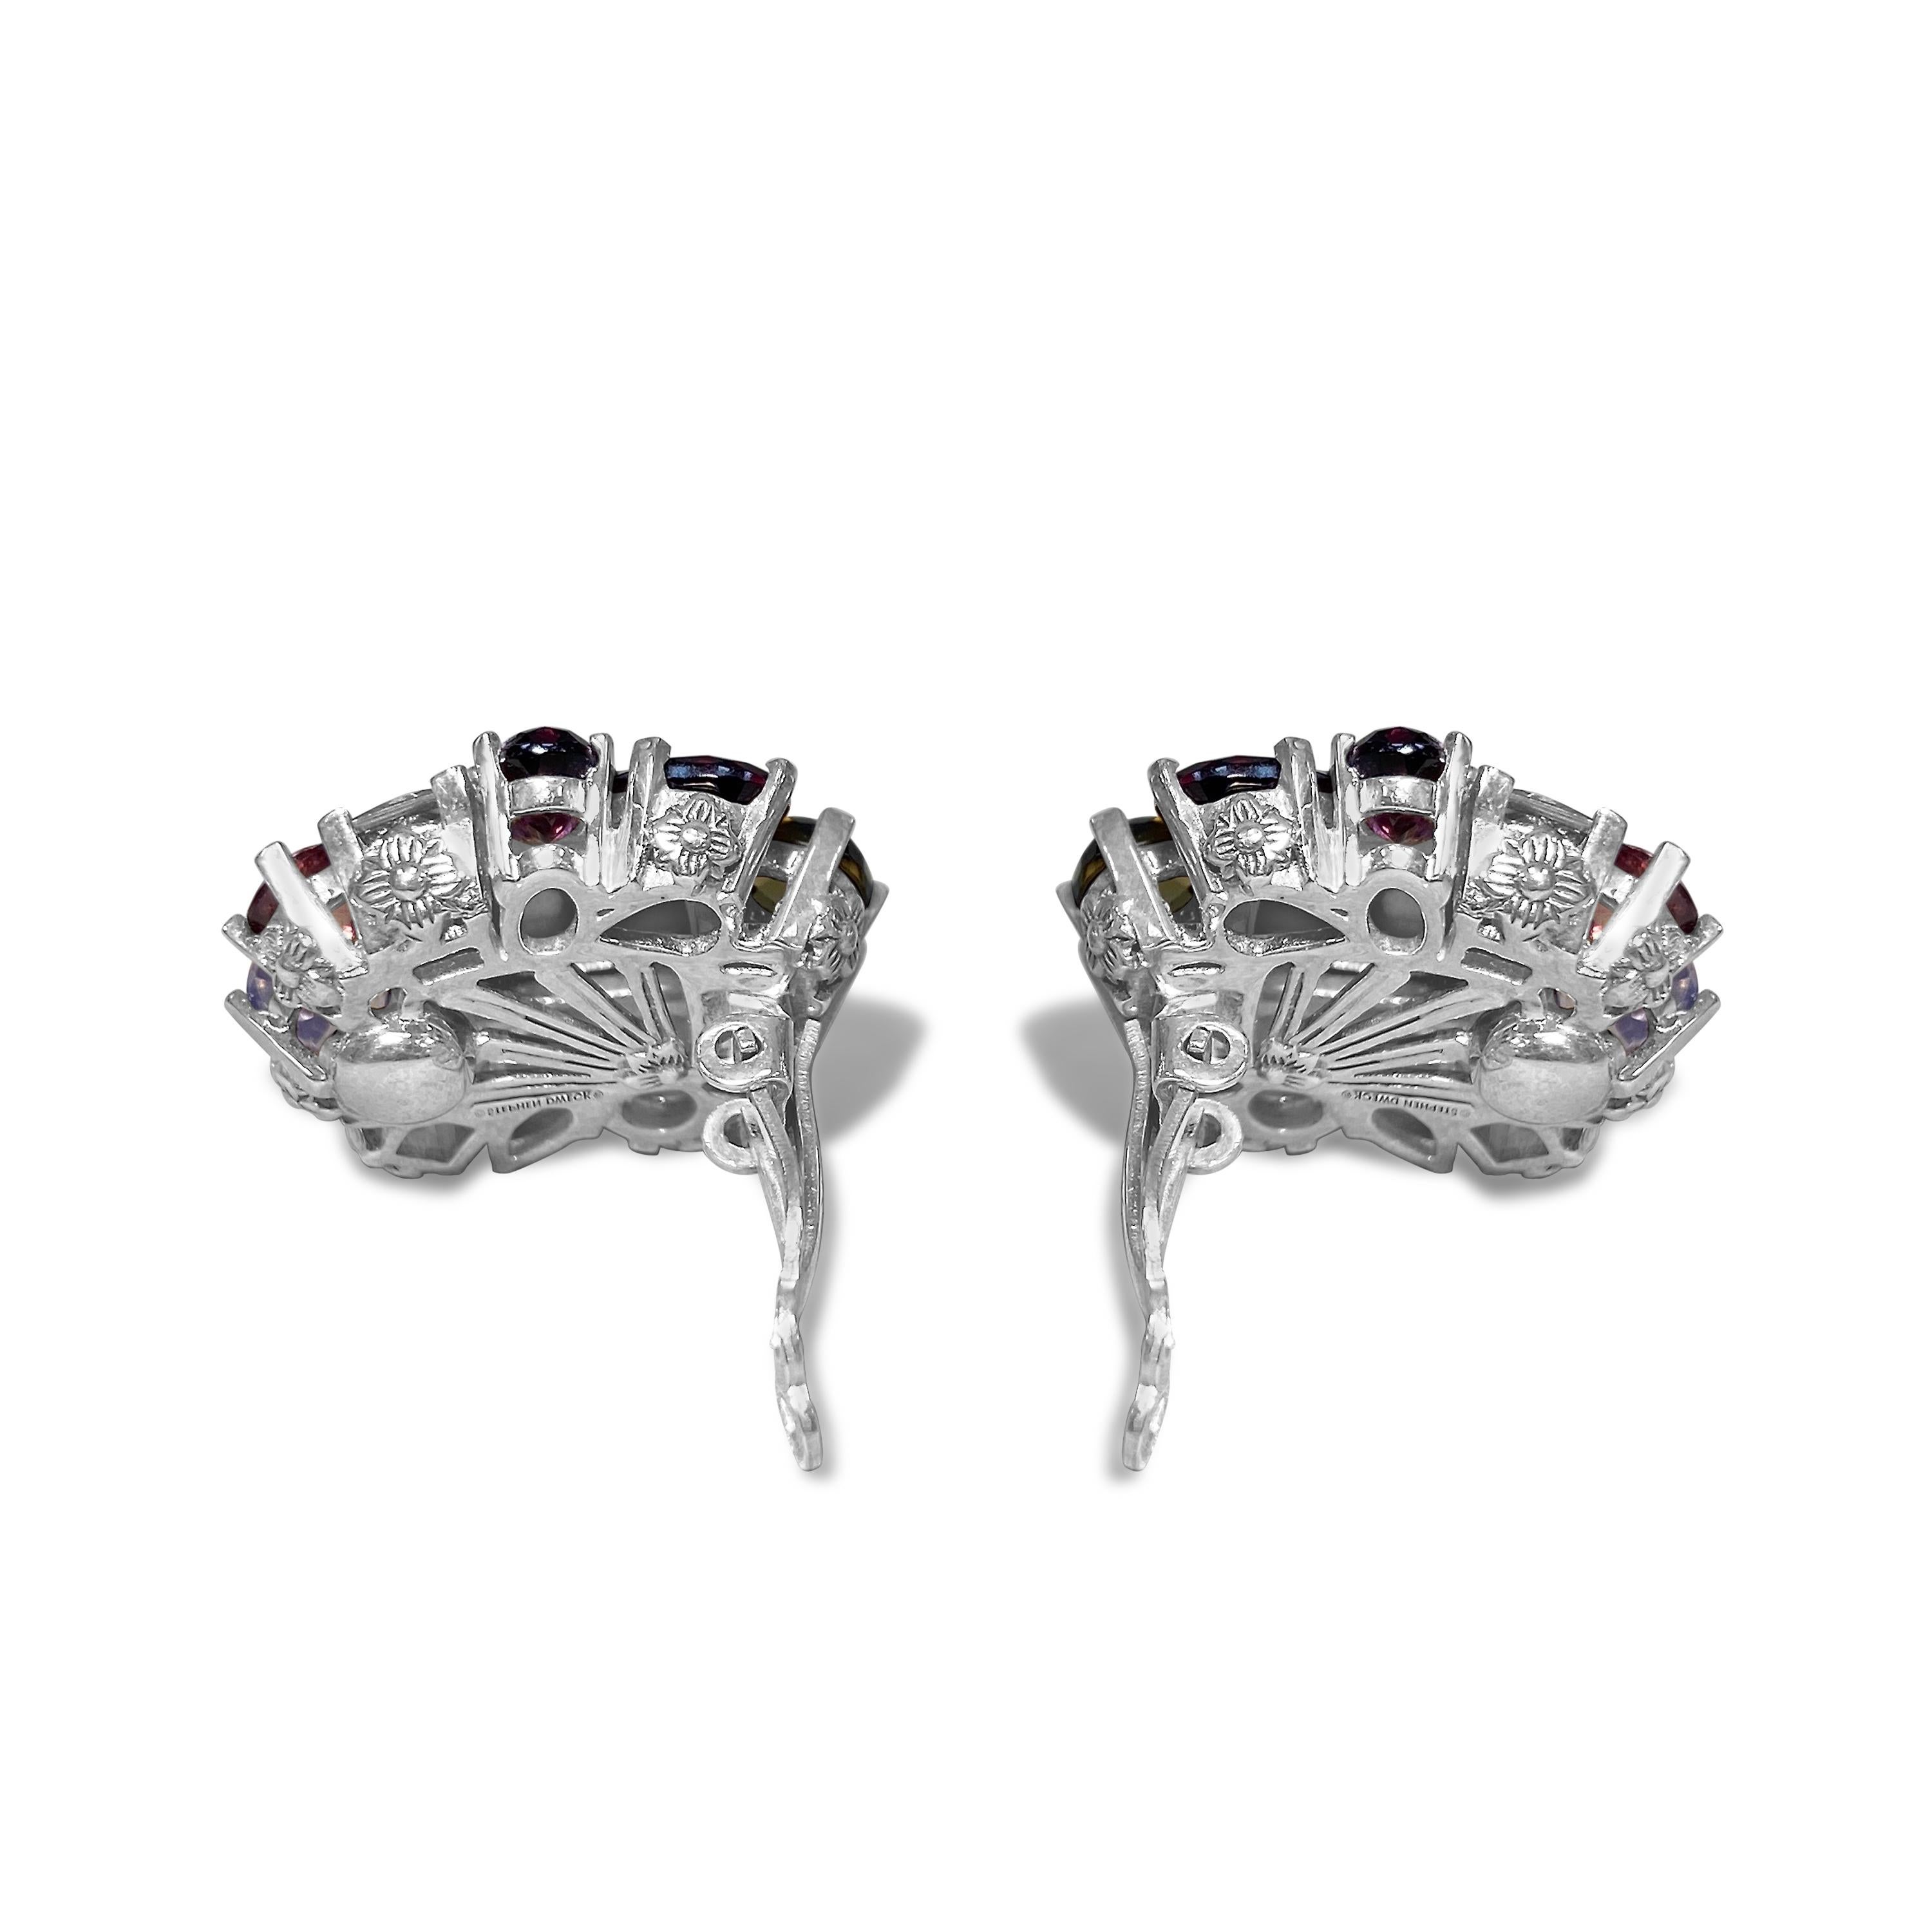 Clustered Prong Set Assorted Gemstone Clip Earrings featuring Rutilated Quartz, Garnets, Citrine, Moon Quartz, Amethyst, and Tourmaline 